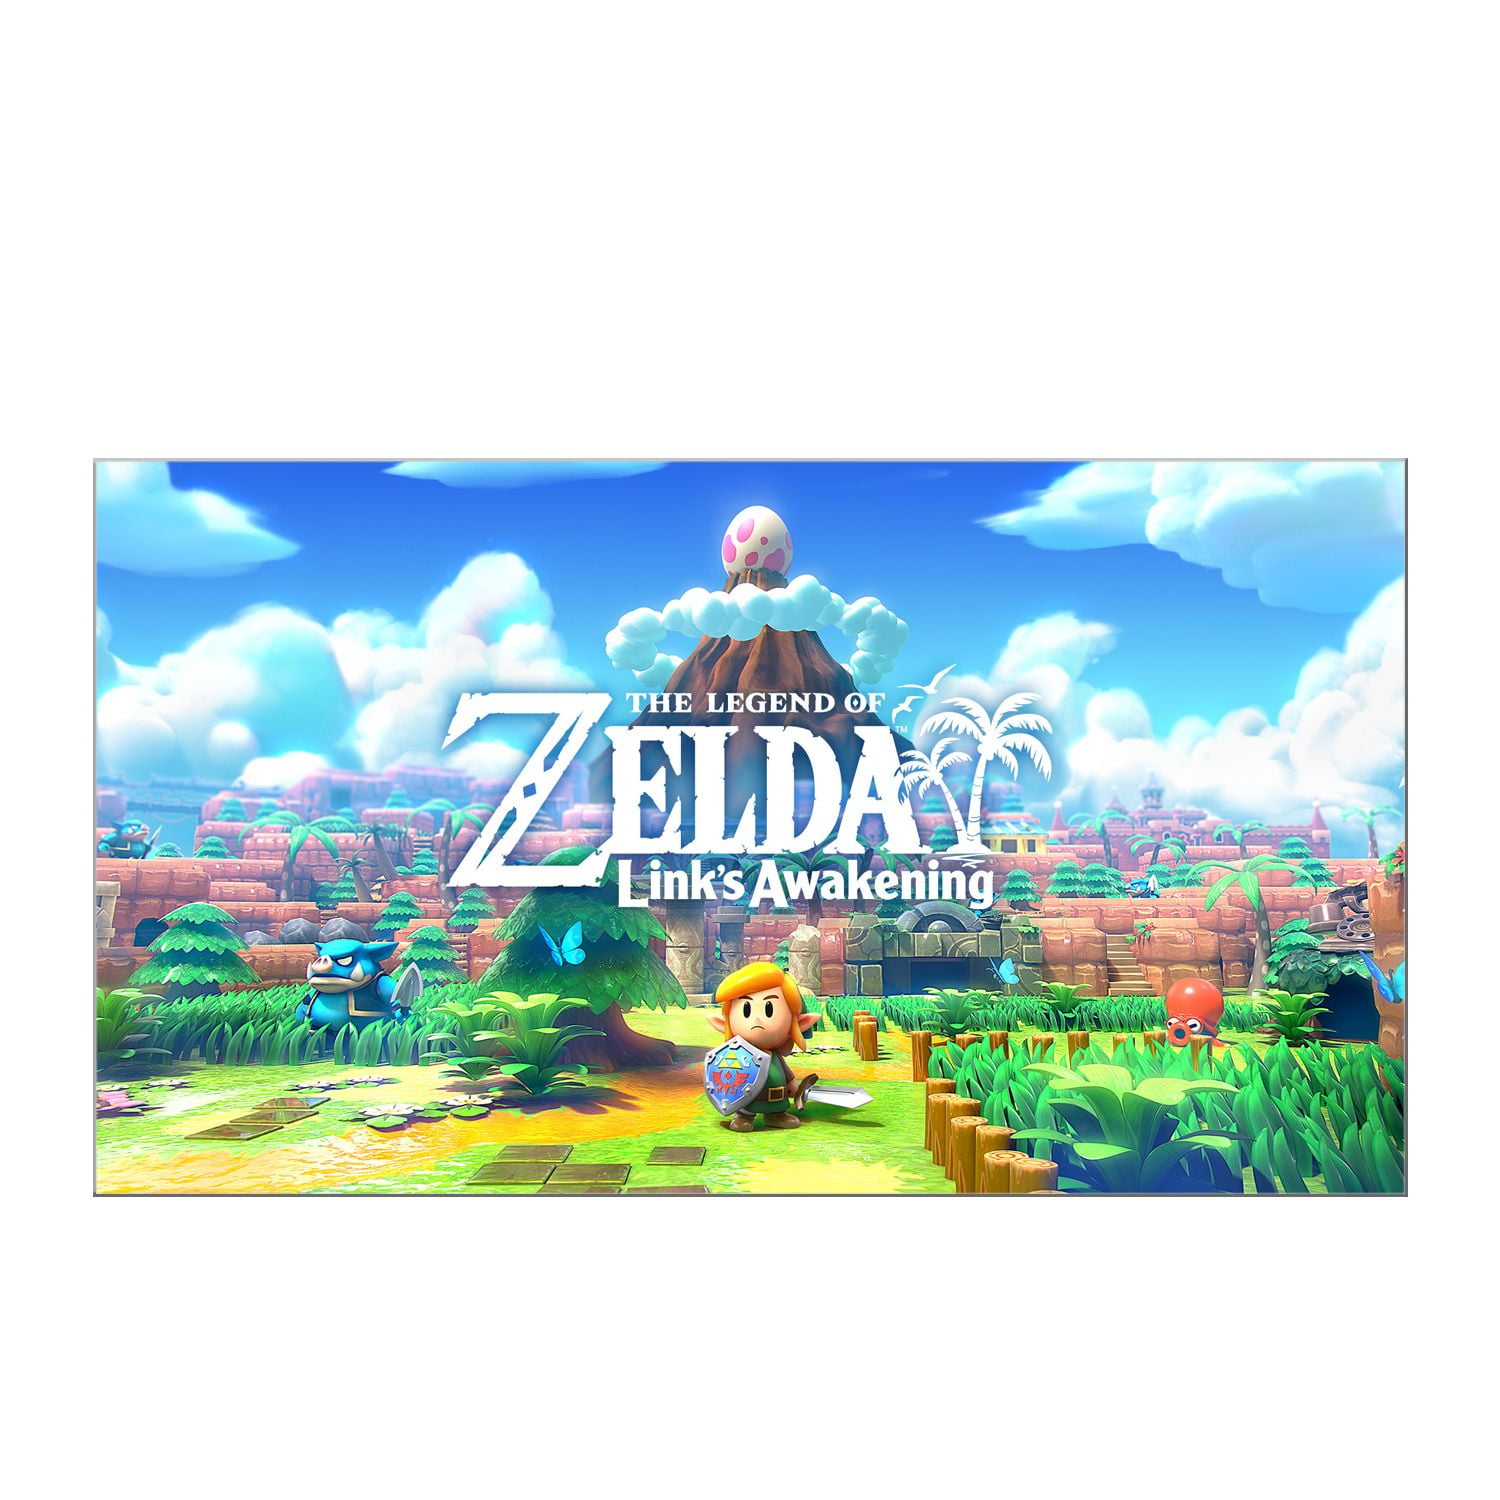 10 Minutes Of The Legend Of Zelda: Link's Awakening On Switch